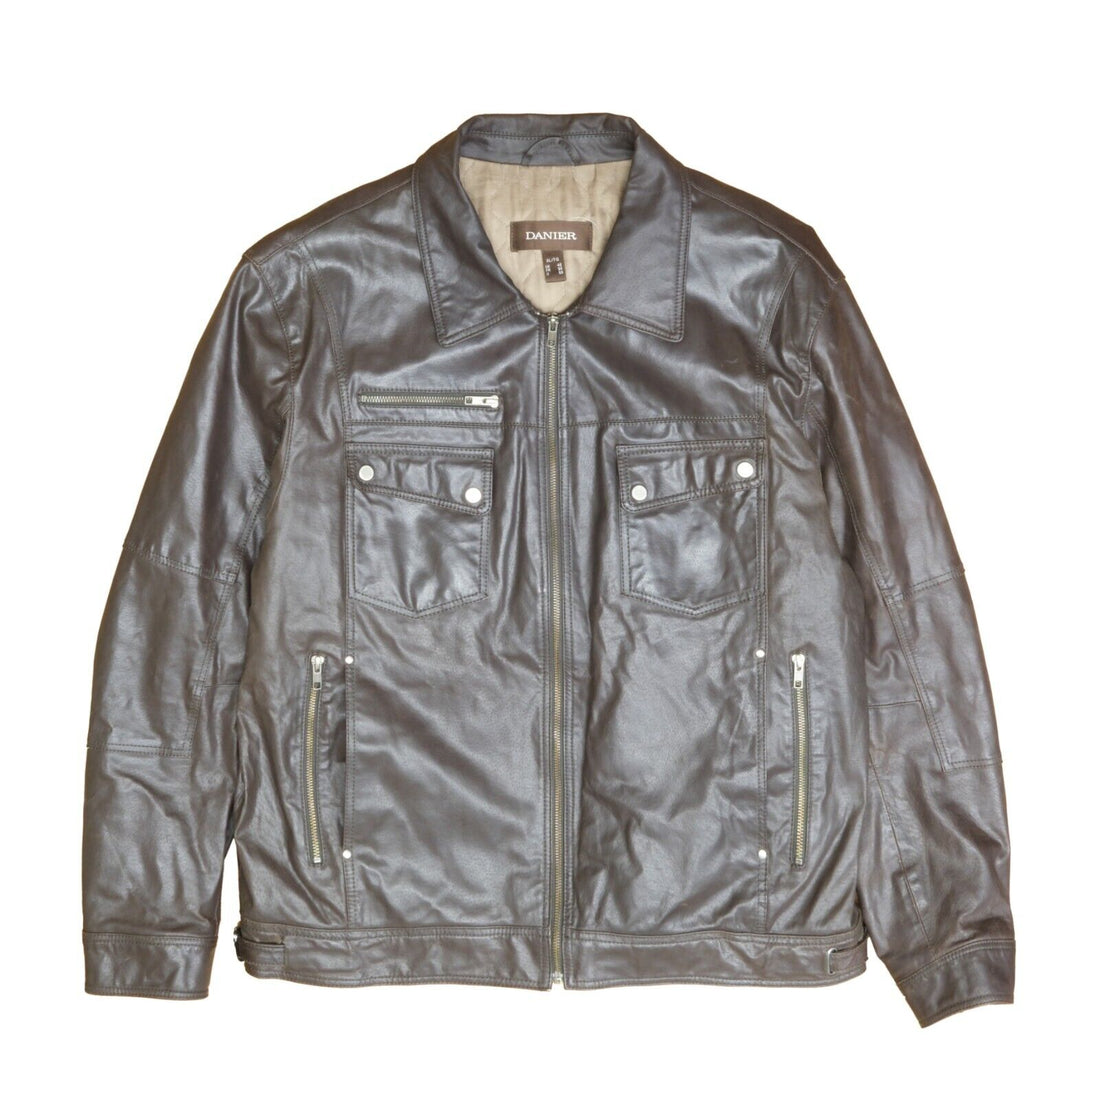 Vintage Danier Leather Motorcycle Jacket Size XL Brown